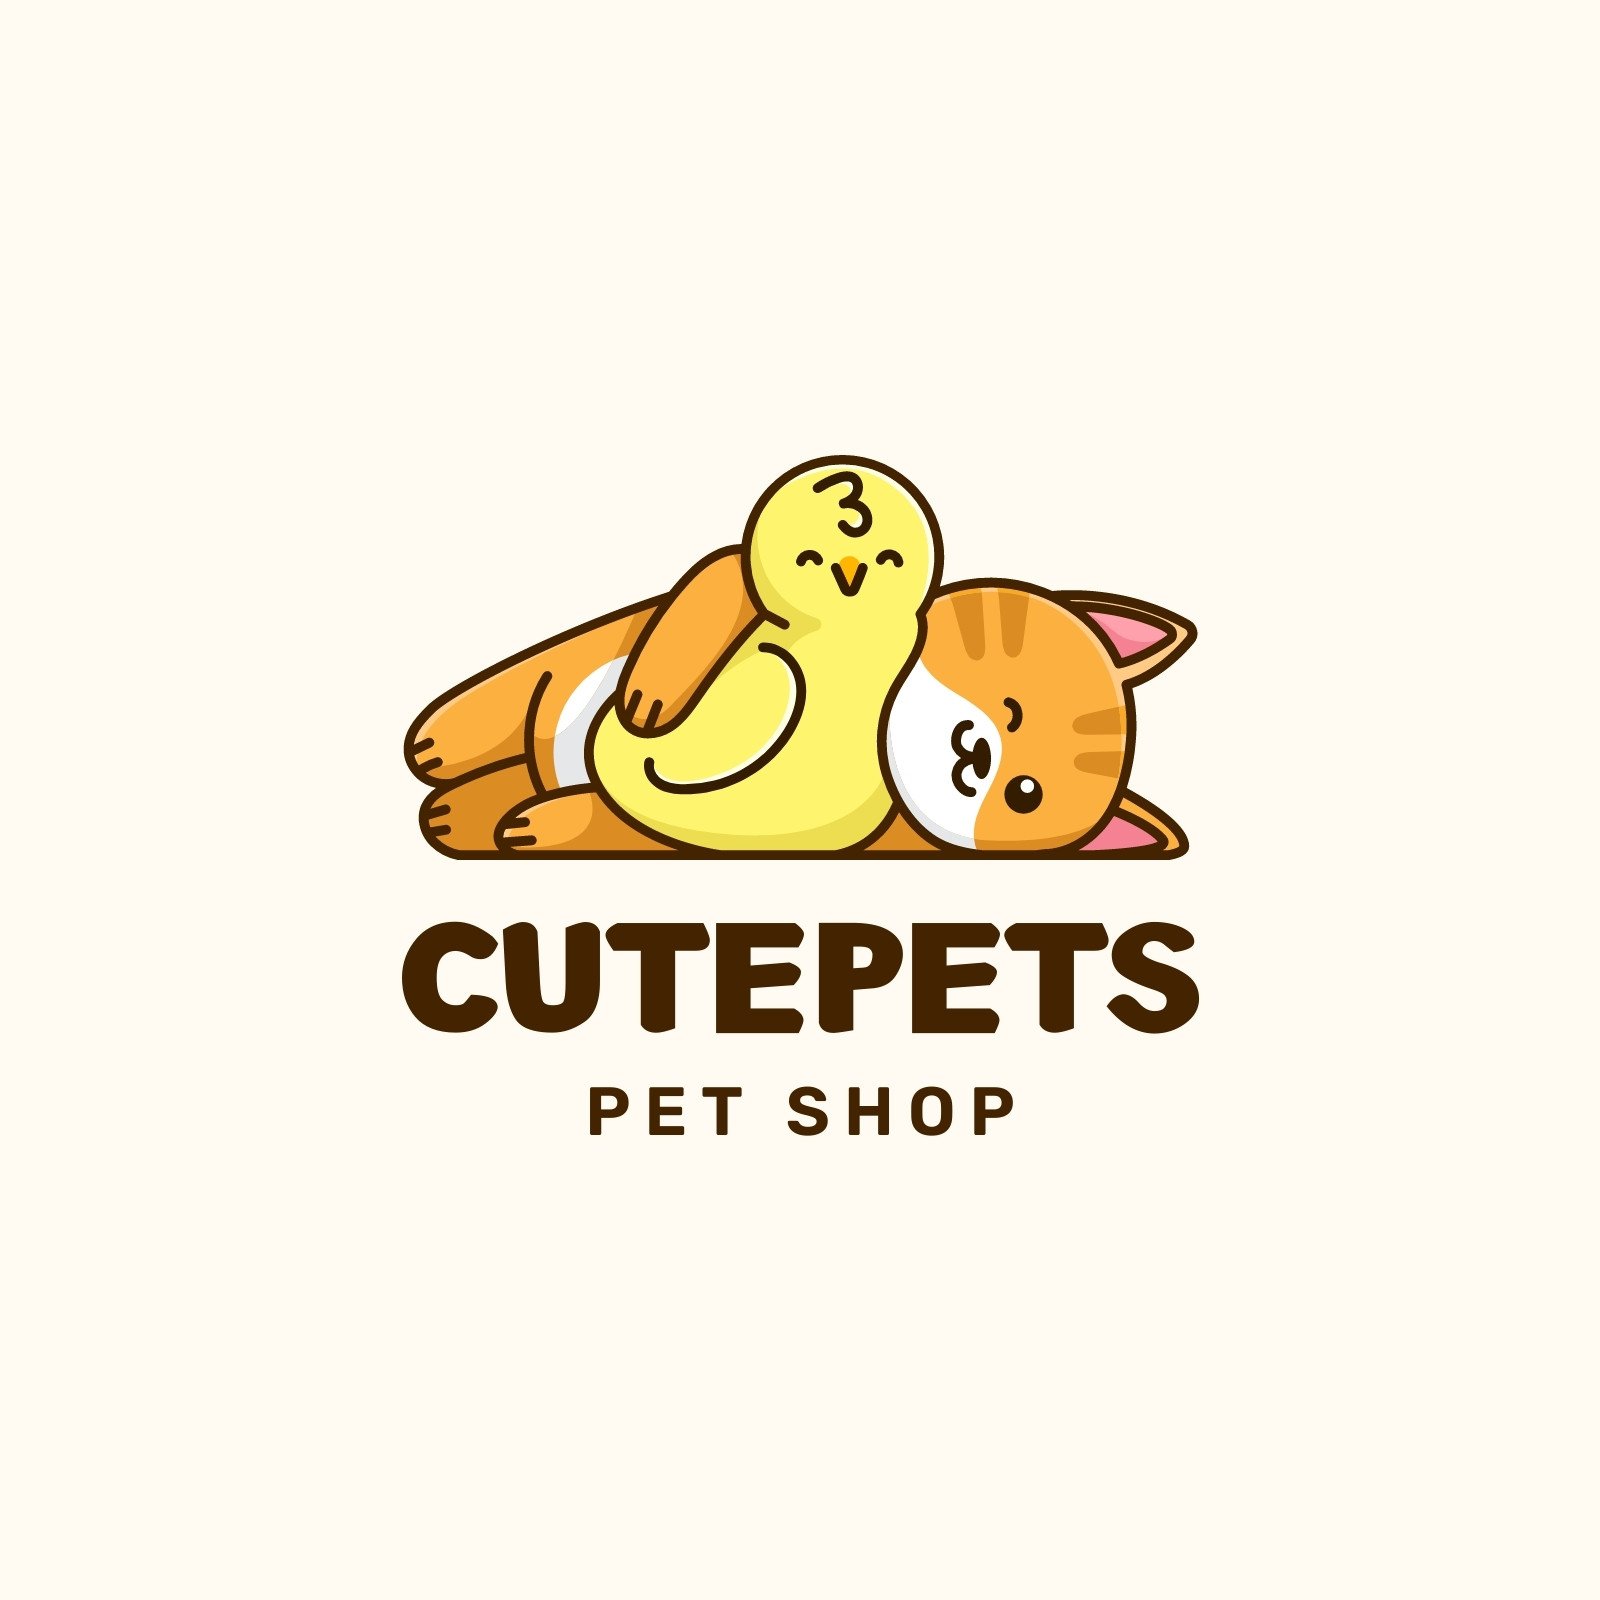 Customize 1,172+ Pet Shop Logo Templates Online - Canva